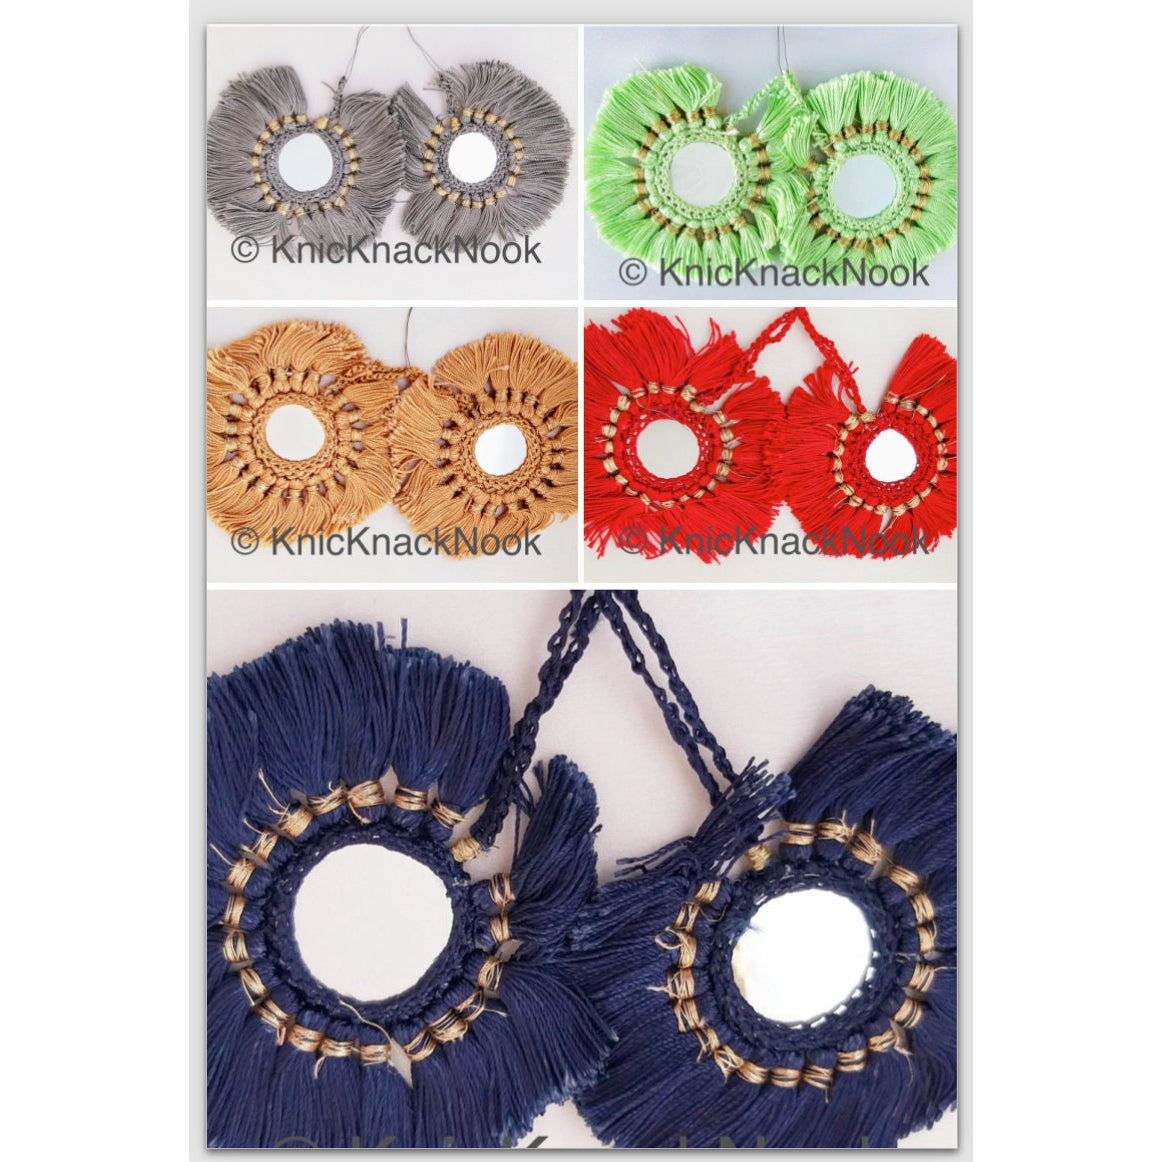 Mirrored Tassels In Grey / Green / Brown / Red / Blue, Crochet Mirror Tassel, Handmade Latkan Boho